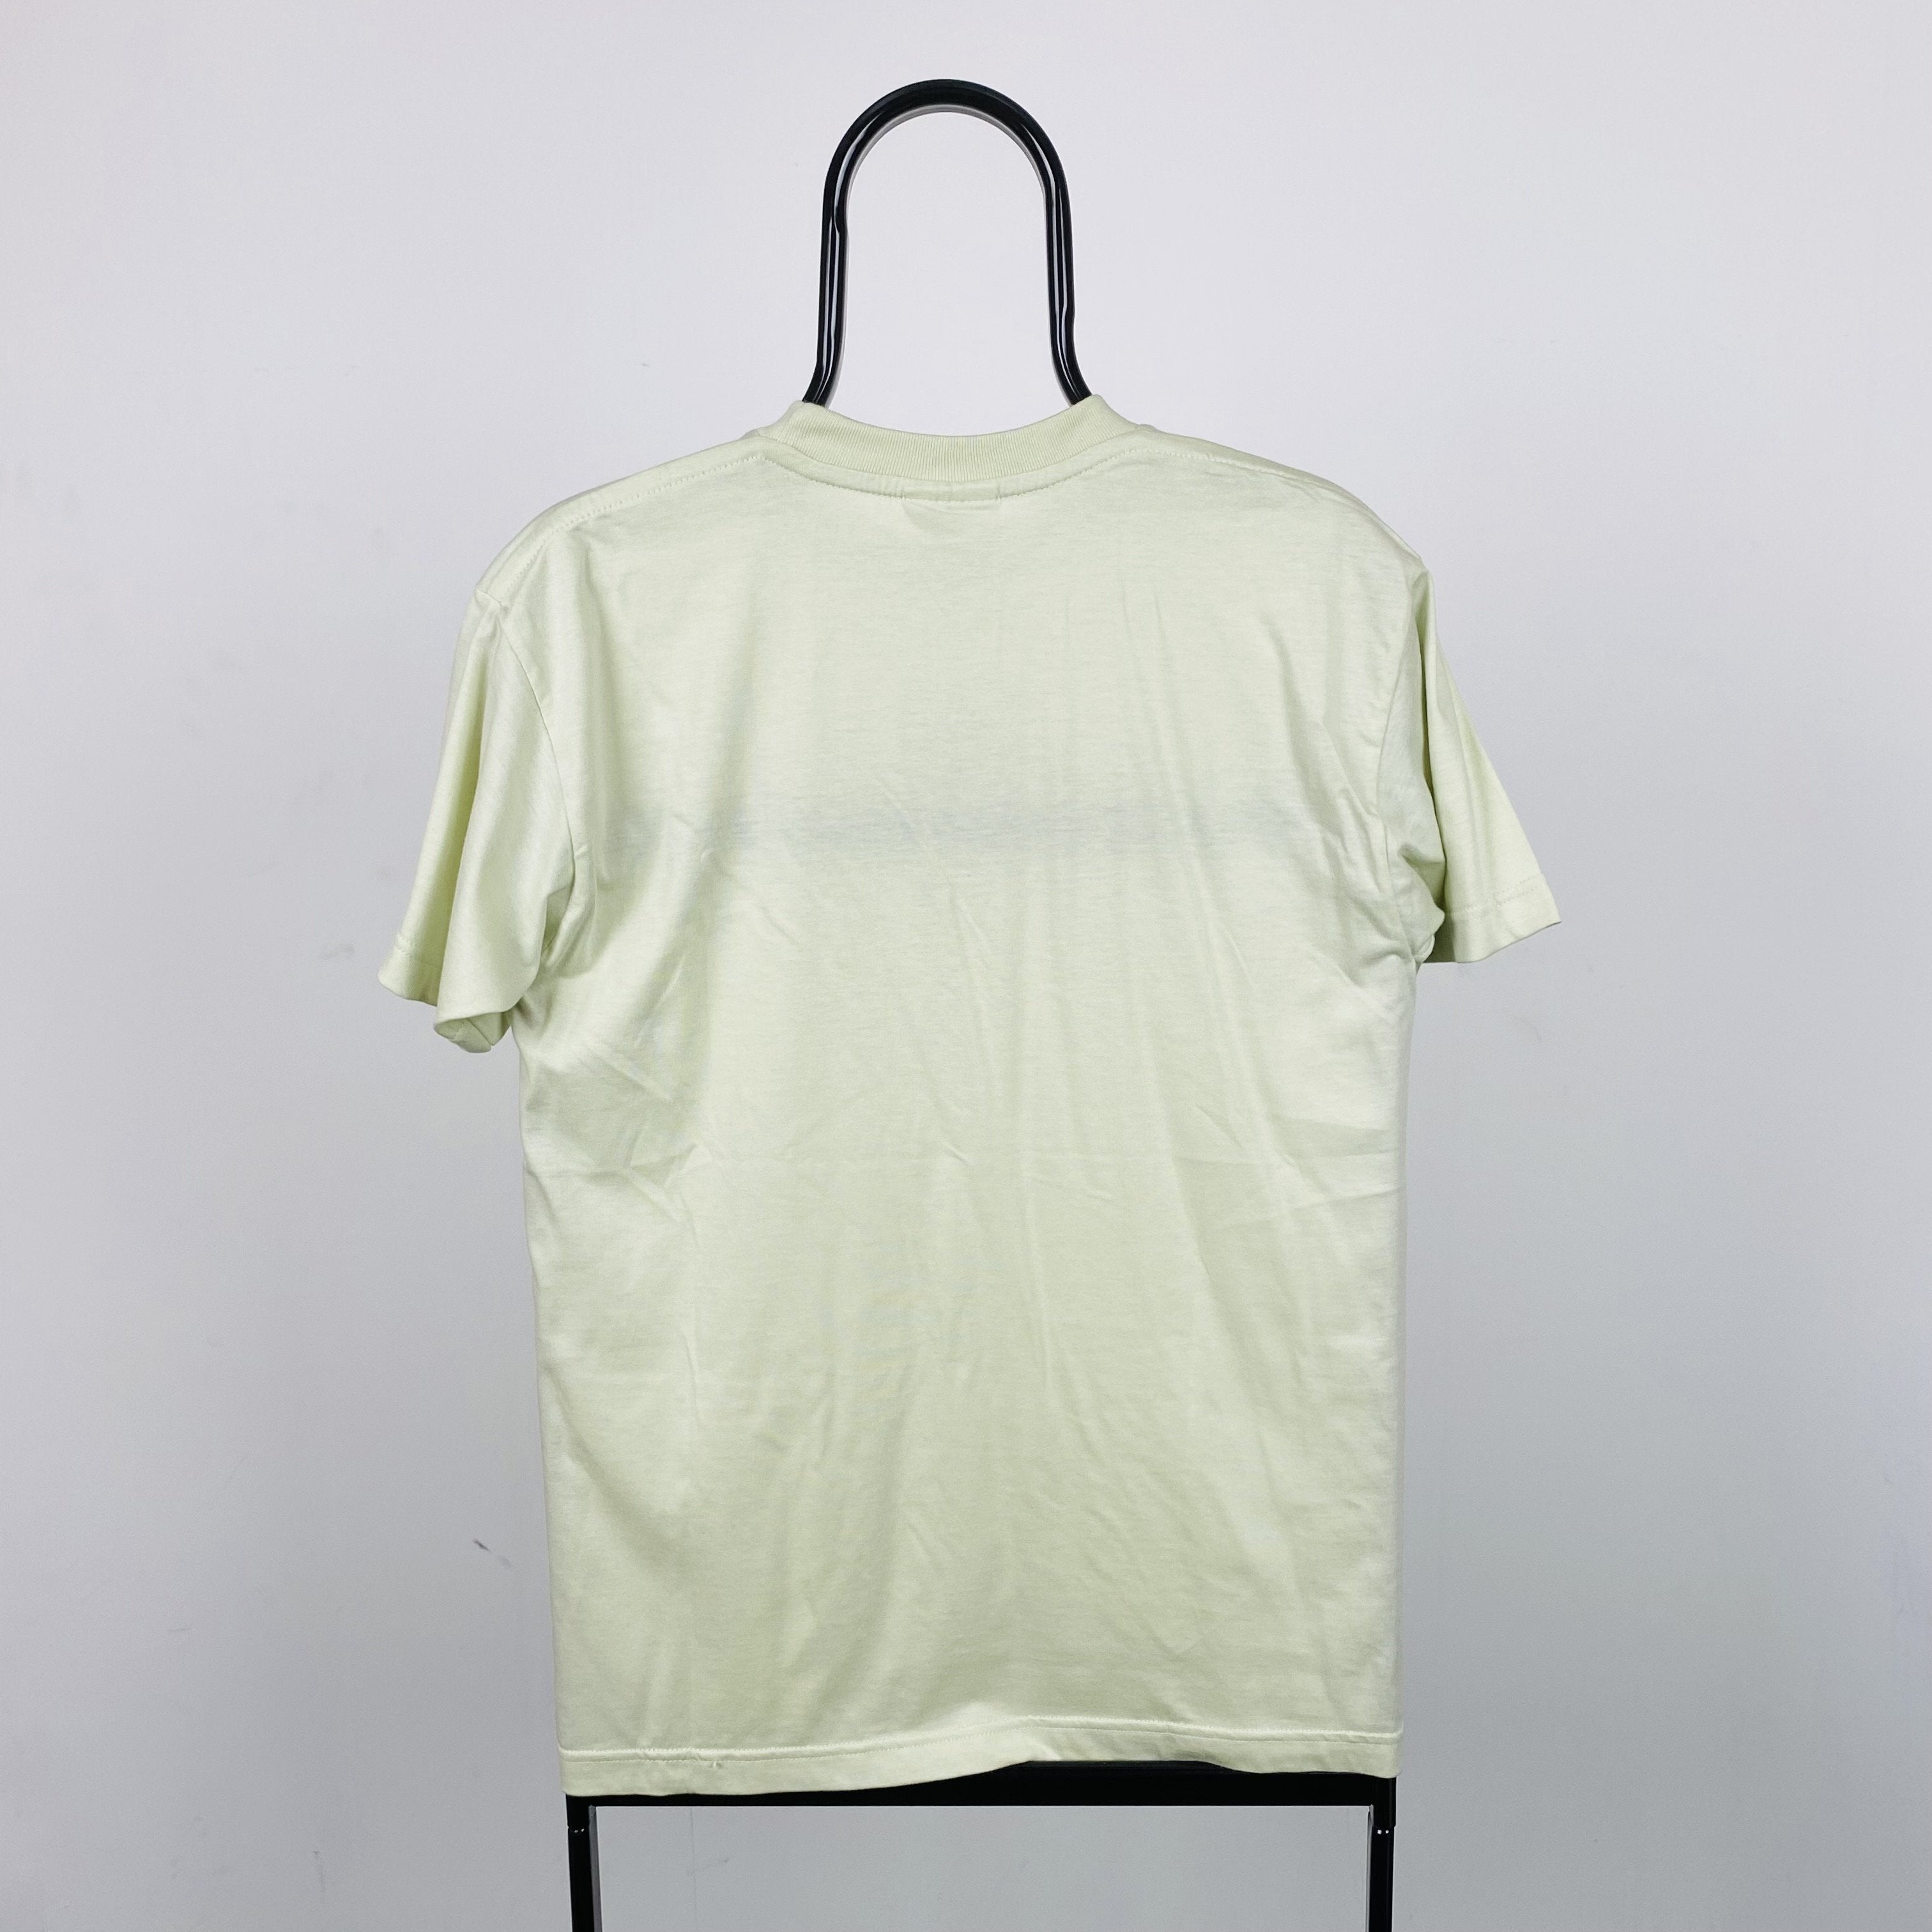 Vintage Nike Athletic T-Shirt Brown XS